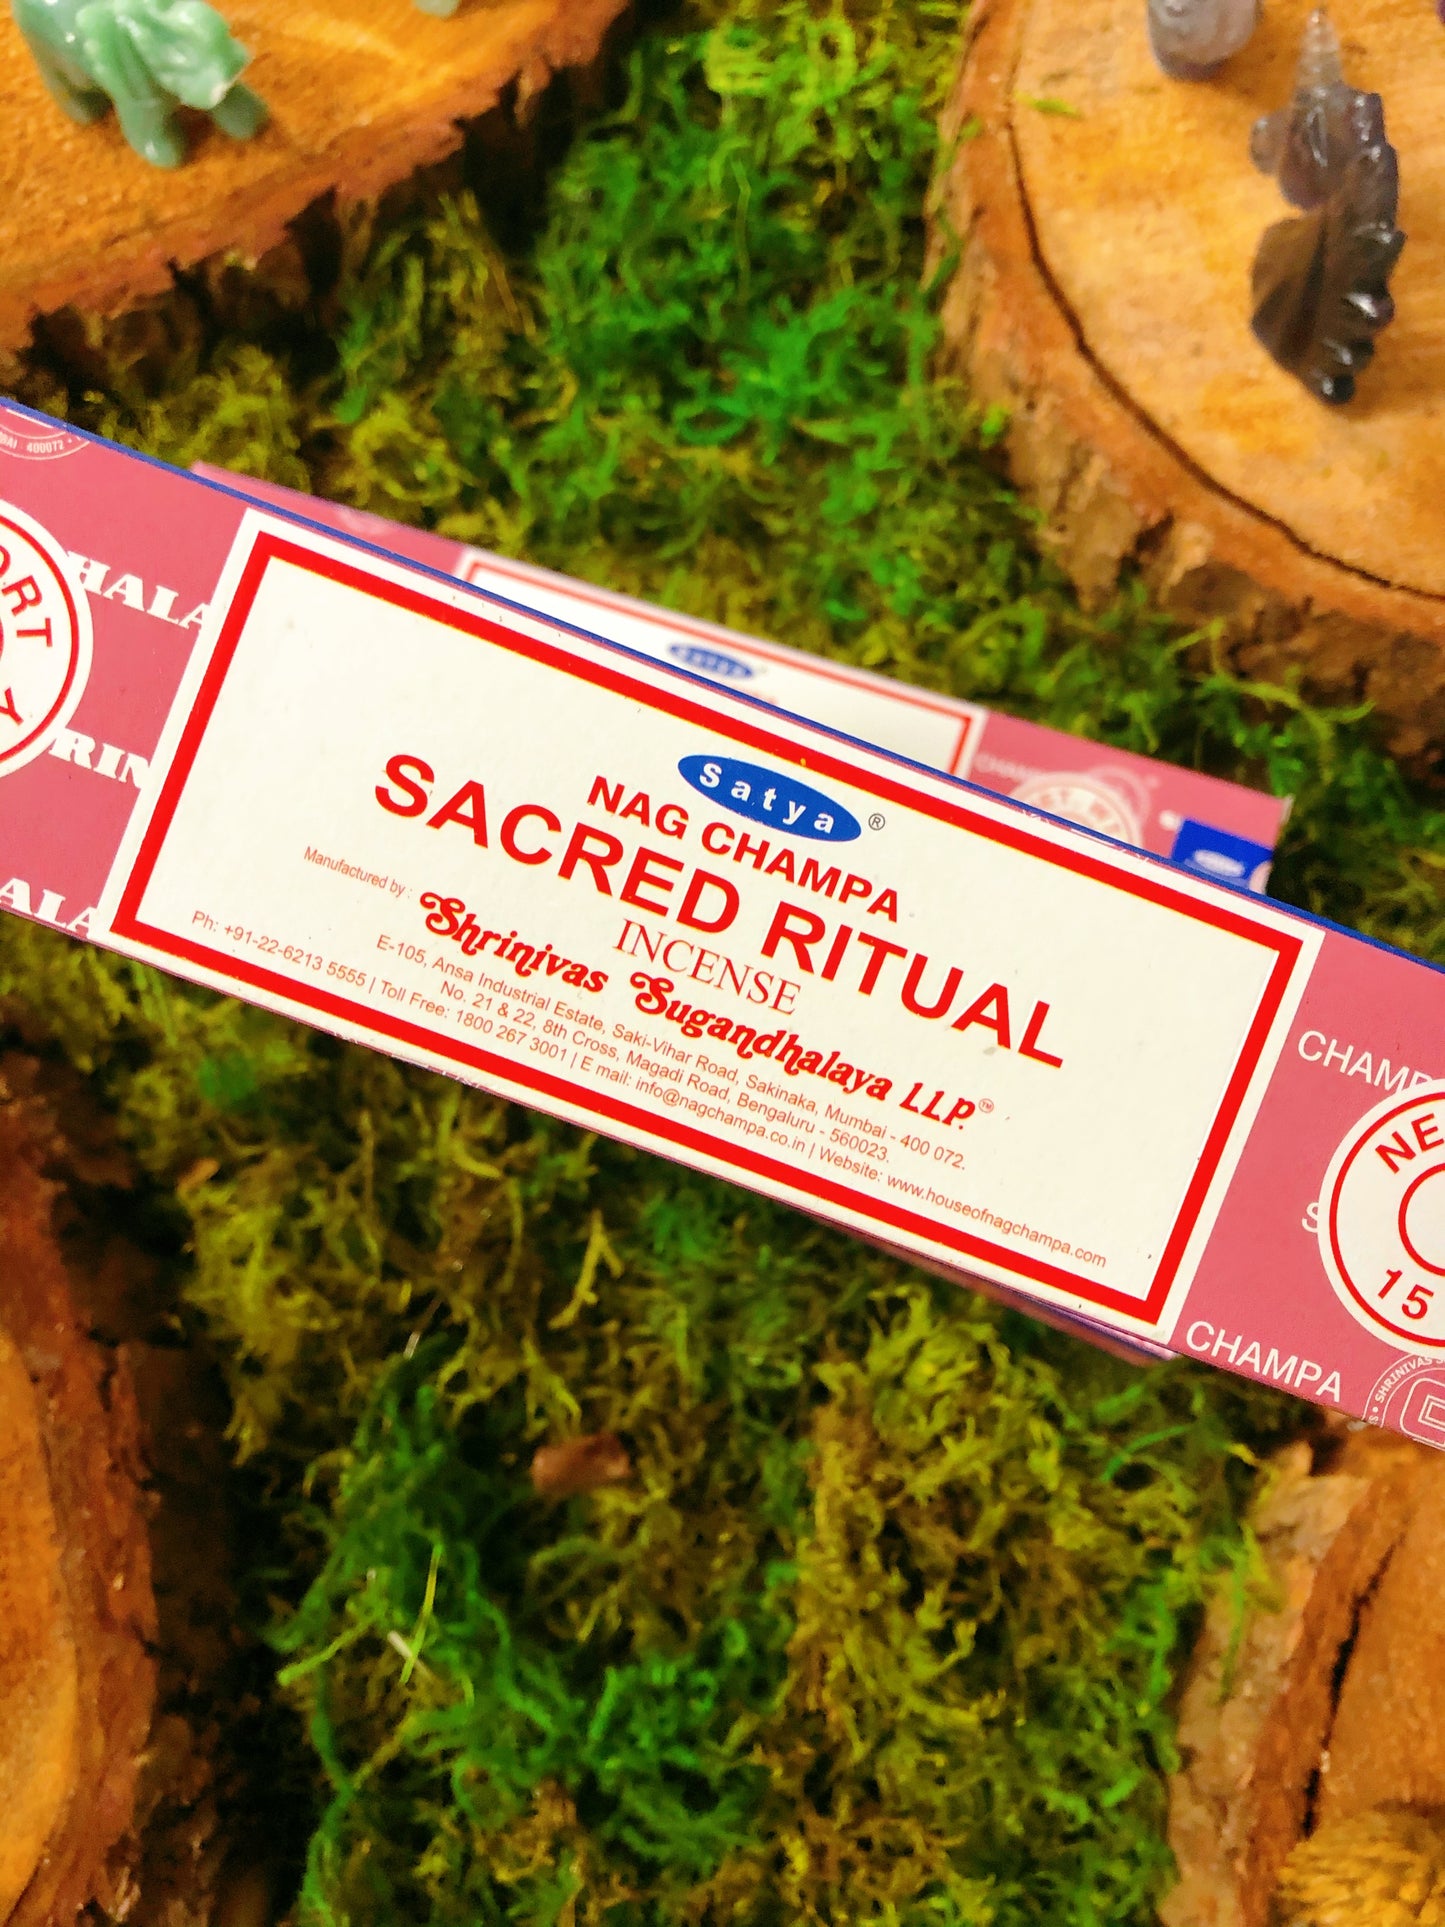 Sacred Ritual Incense